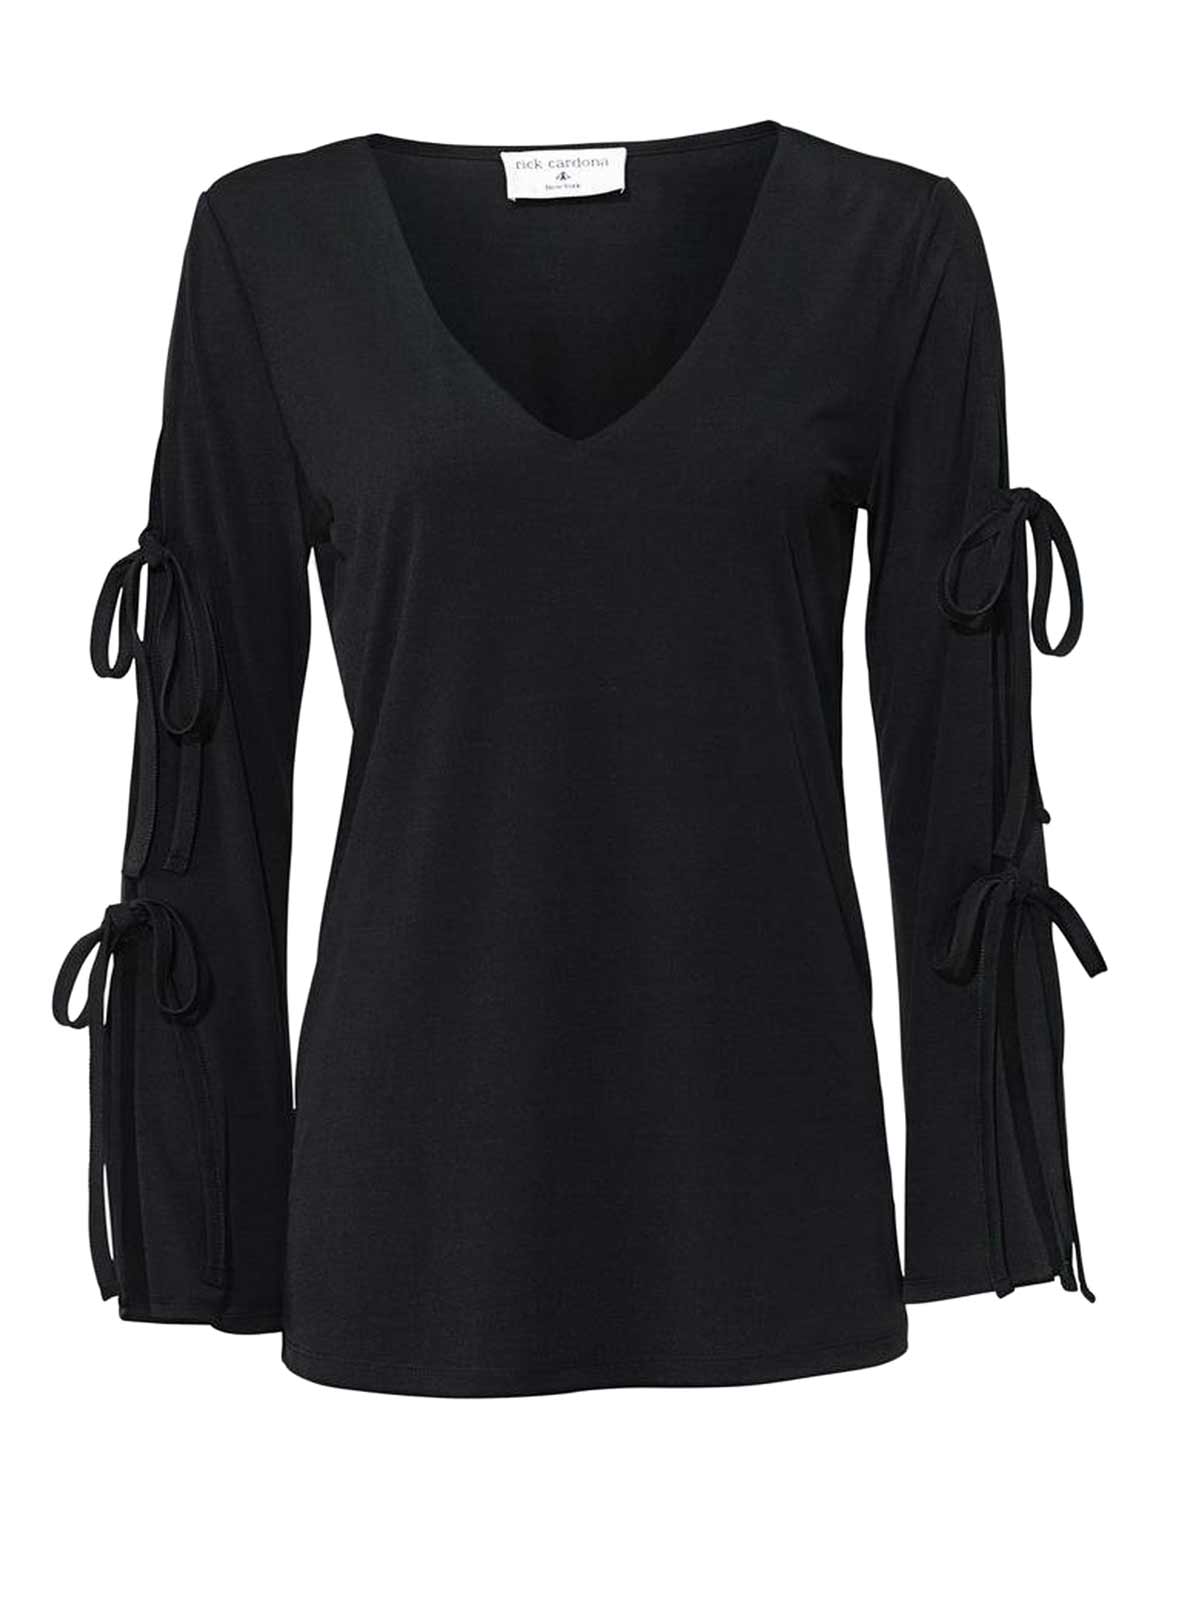 RICK CARDONA Damen Designer-Jerseyshirt, schwarz